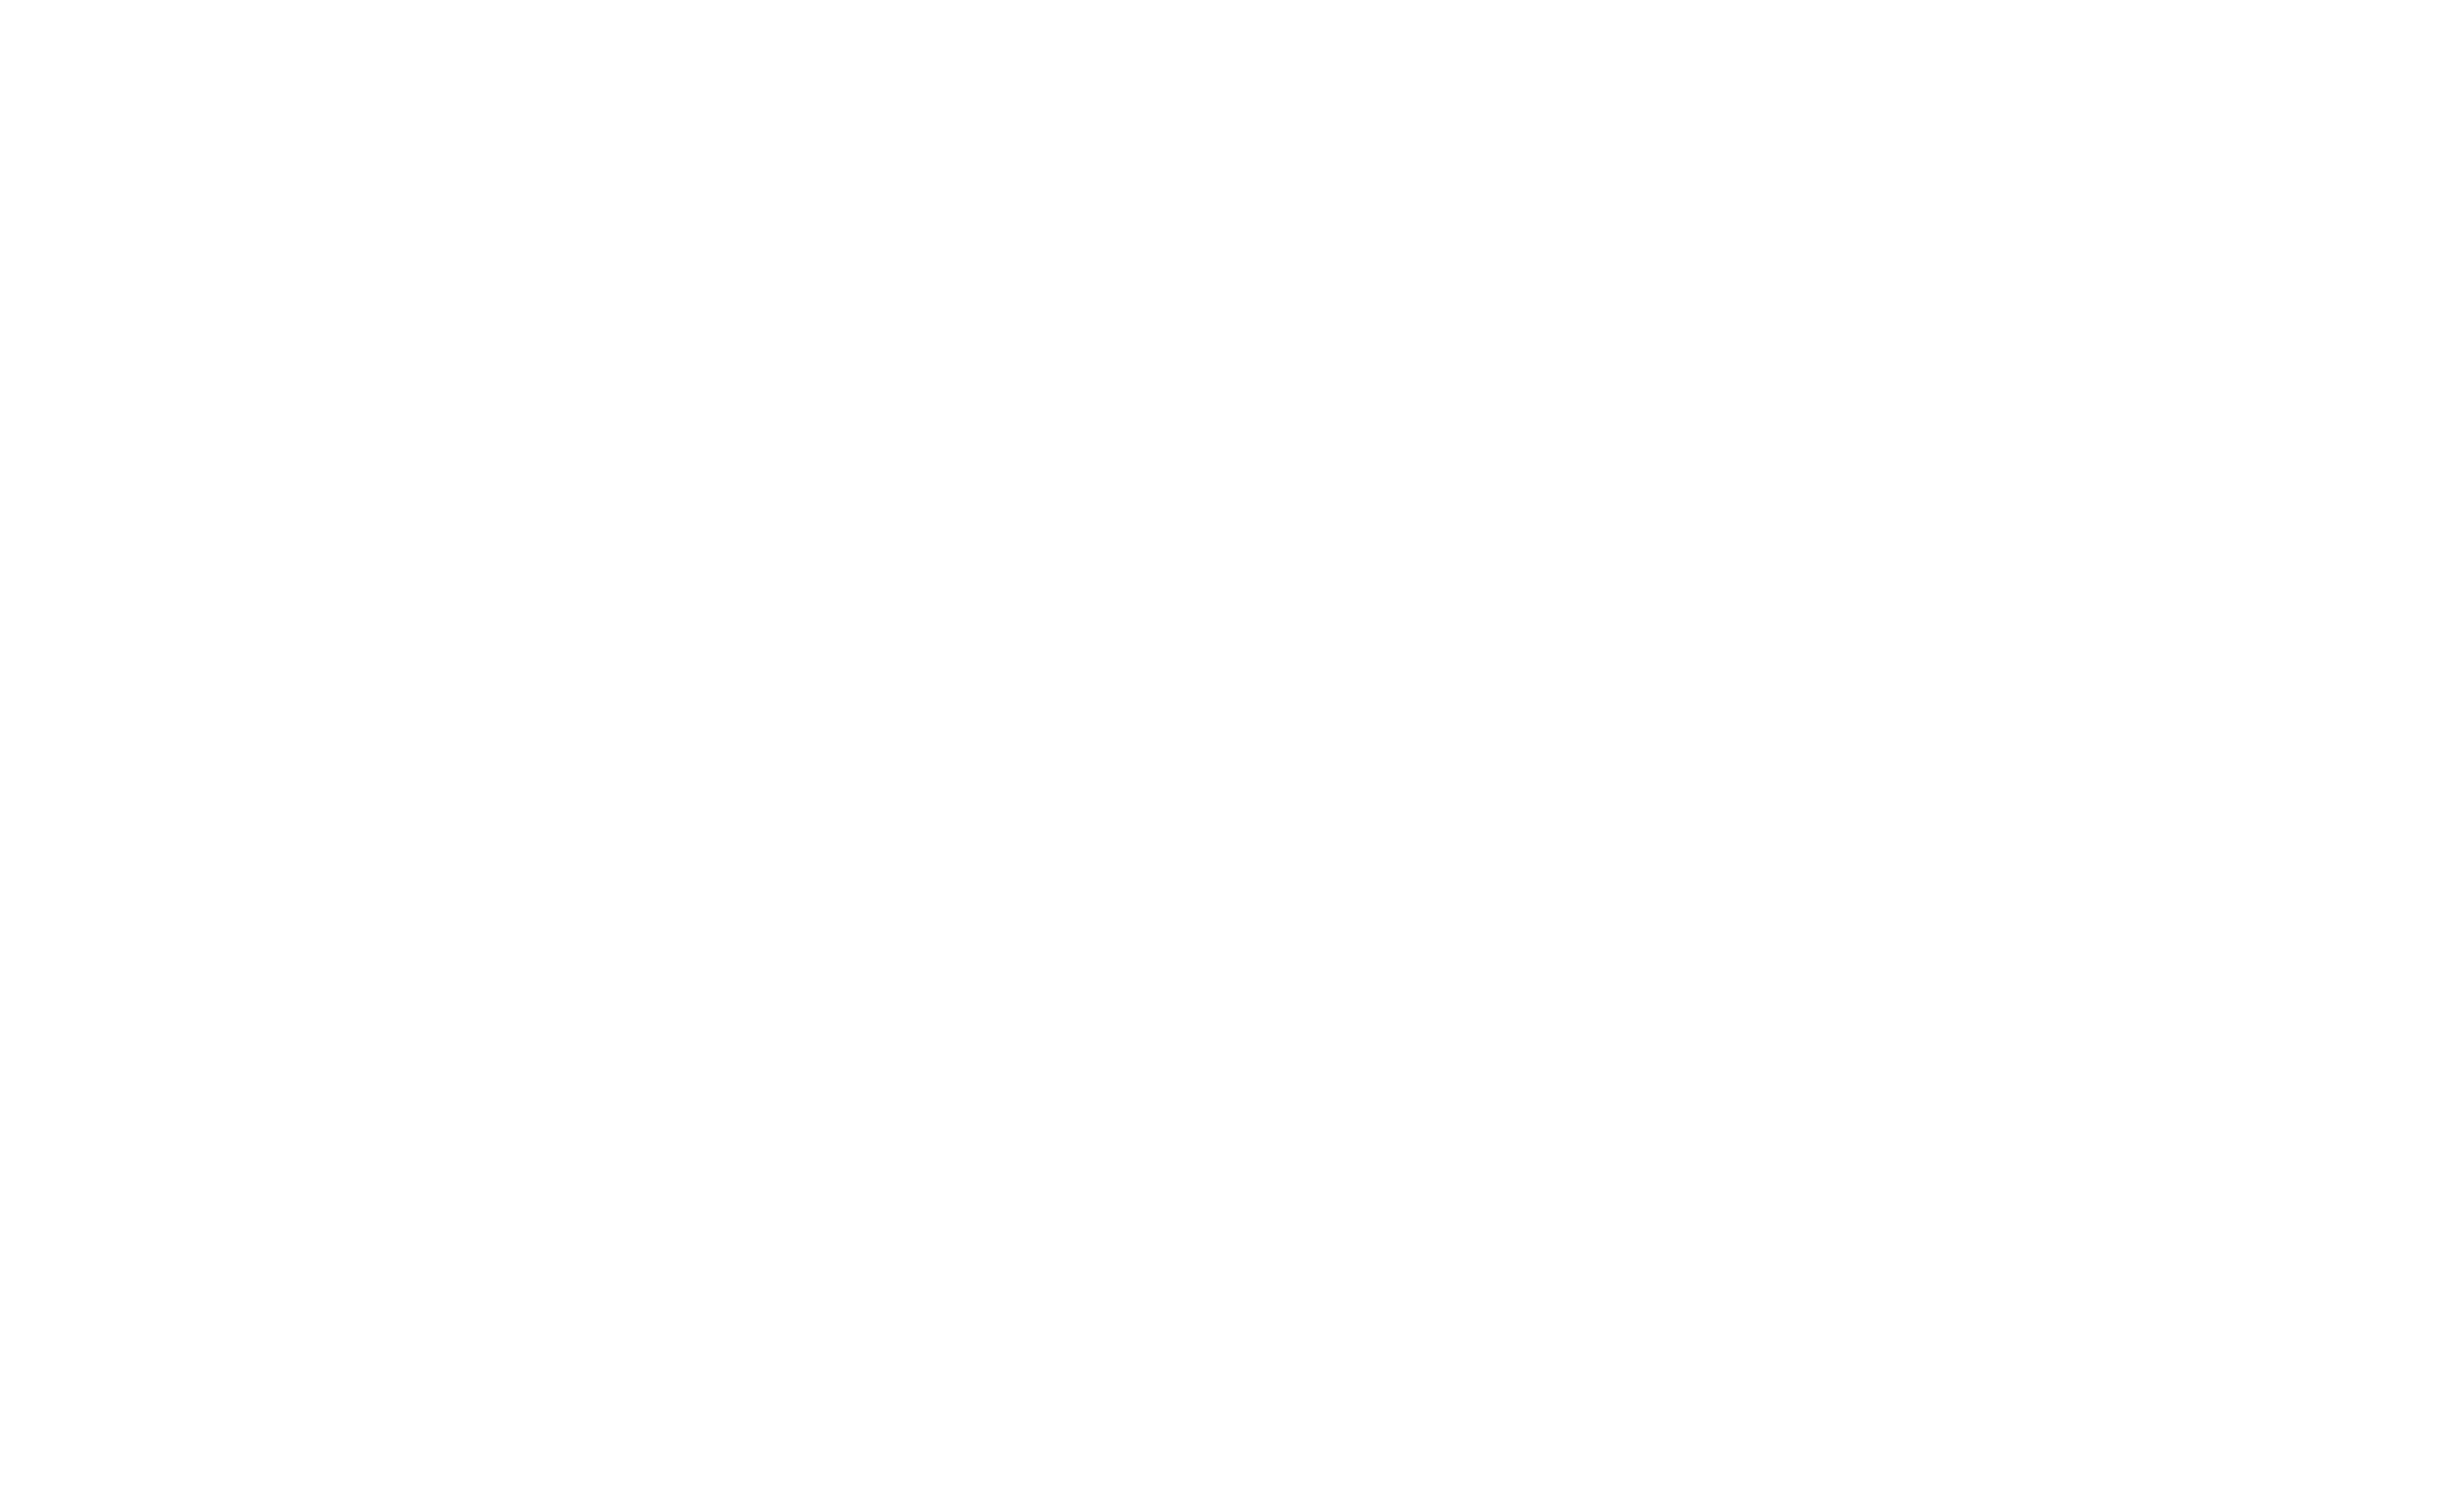 Re-Elect Mayor Cassie Franklin